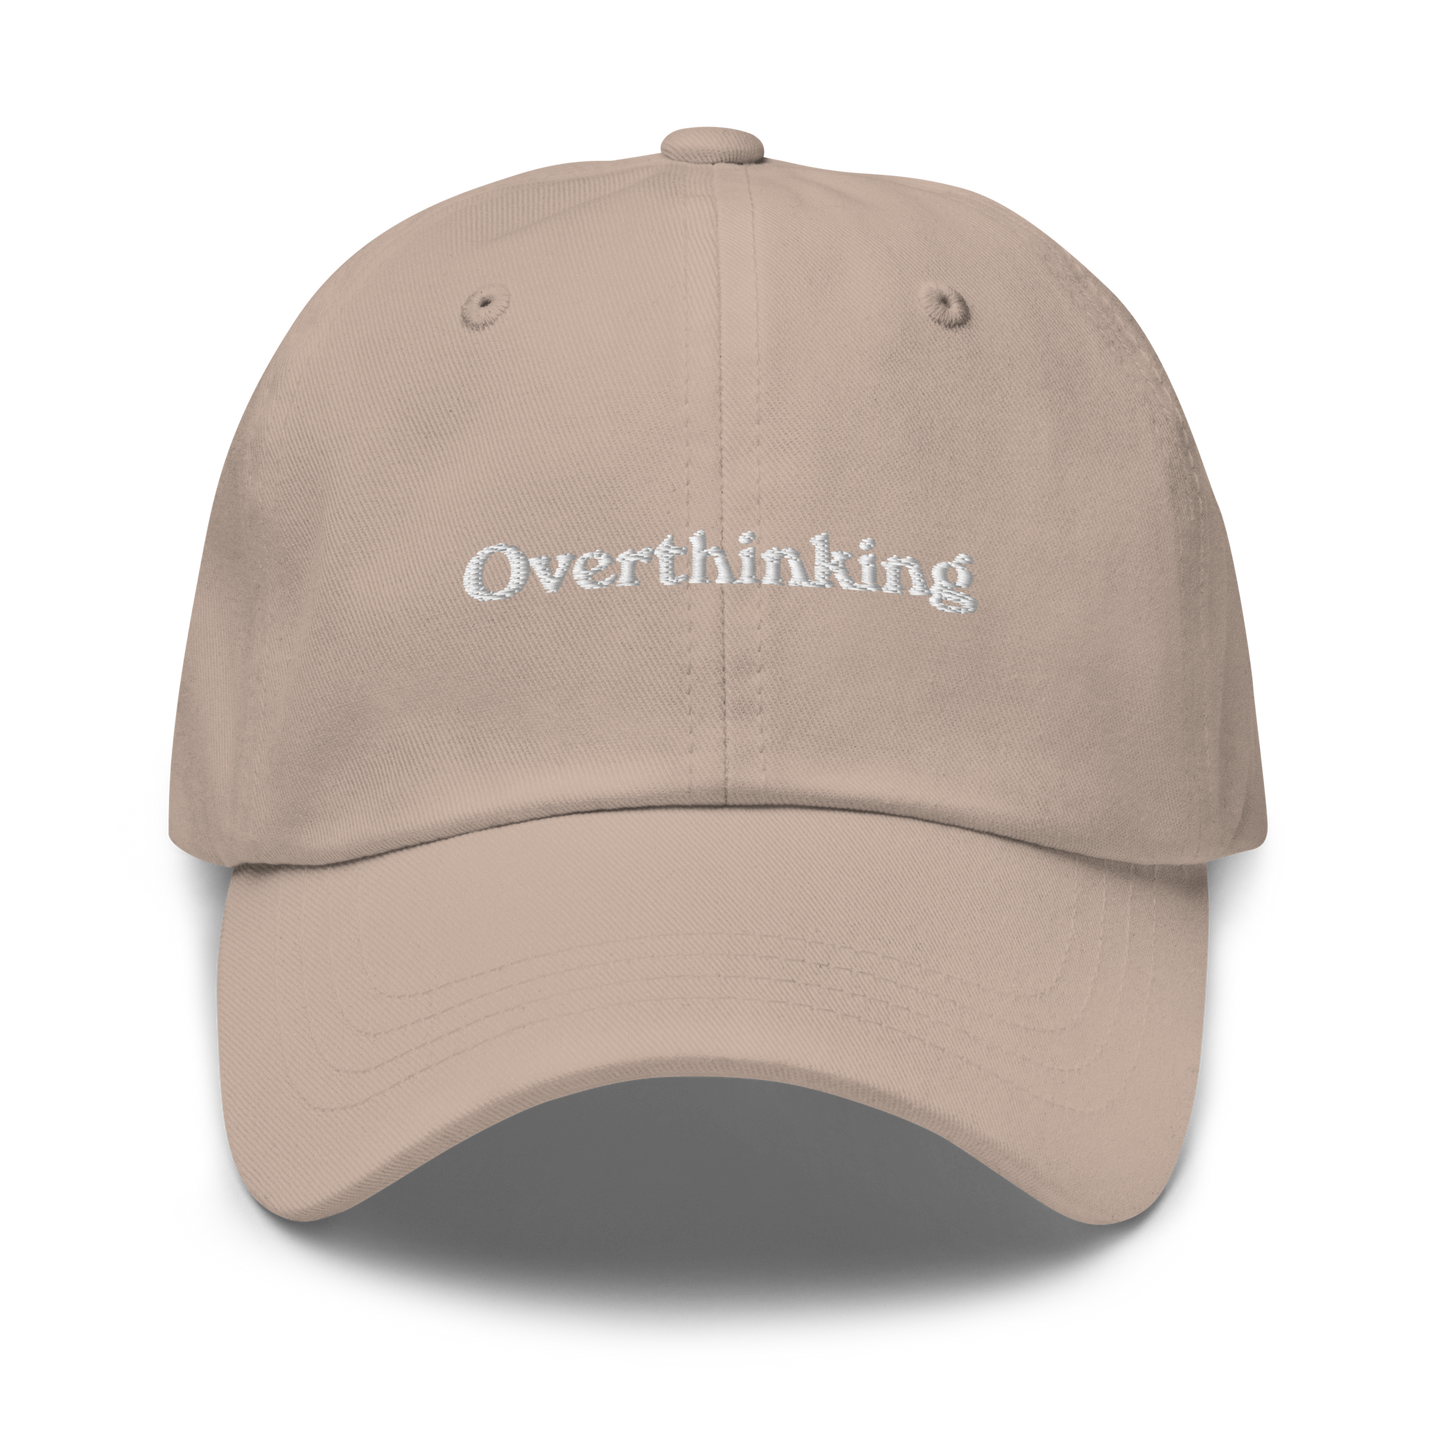 Overthinking Baseball Cap